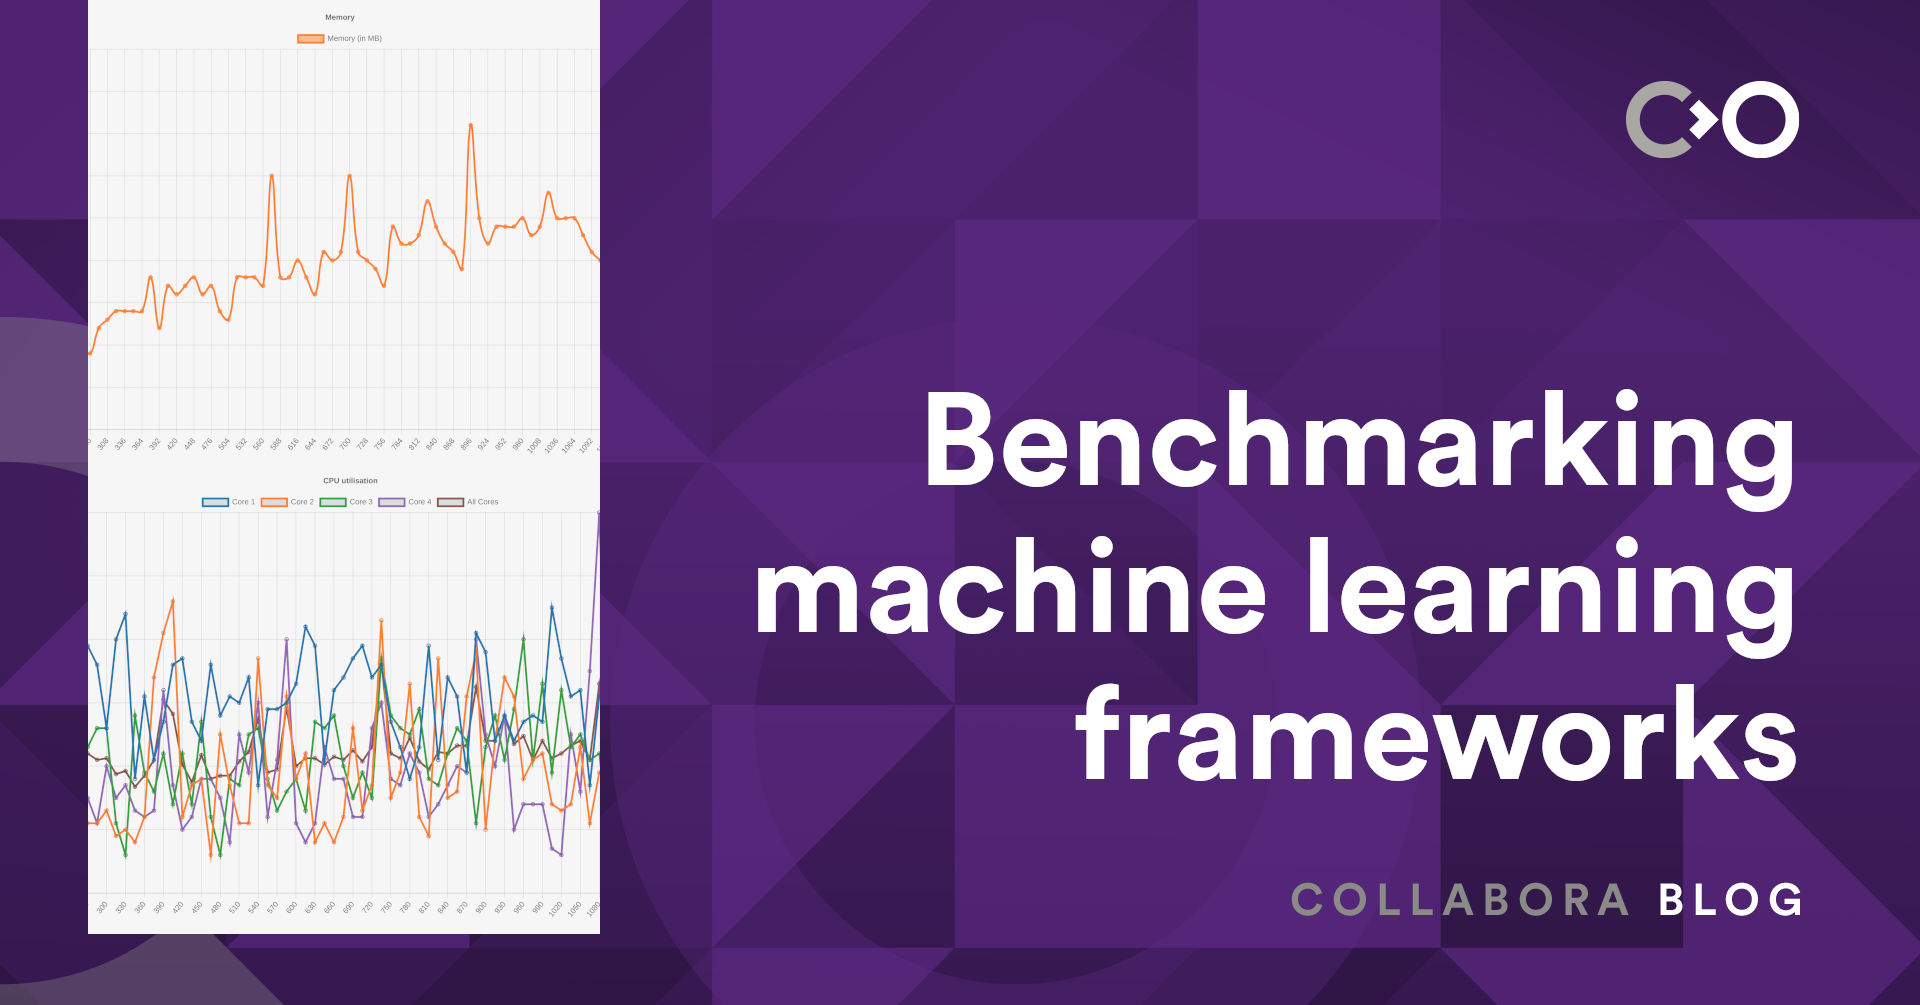 Benchmarking machine learning frameworks